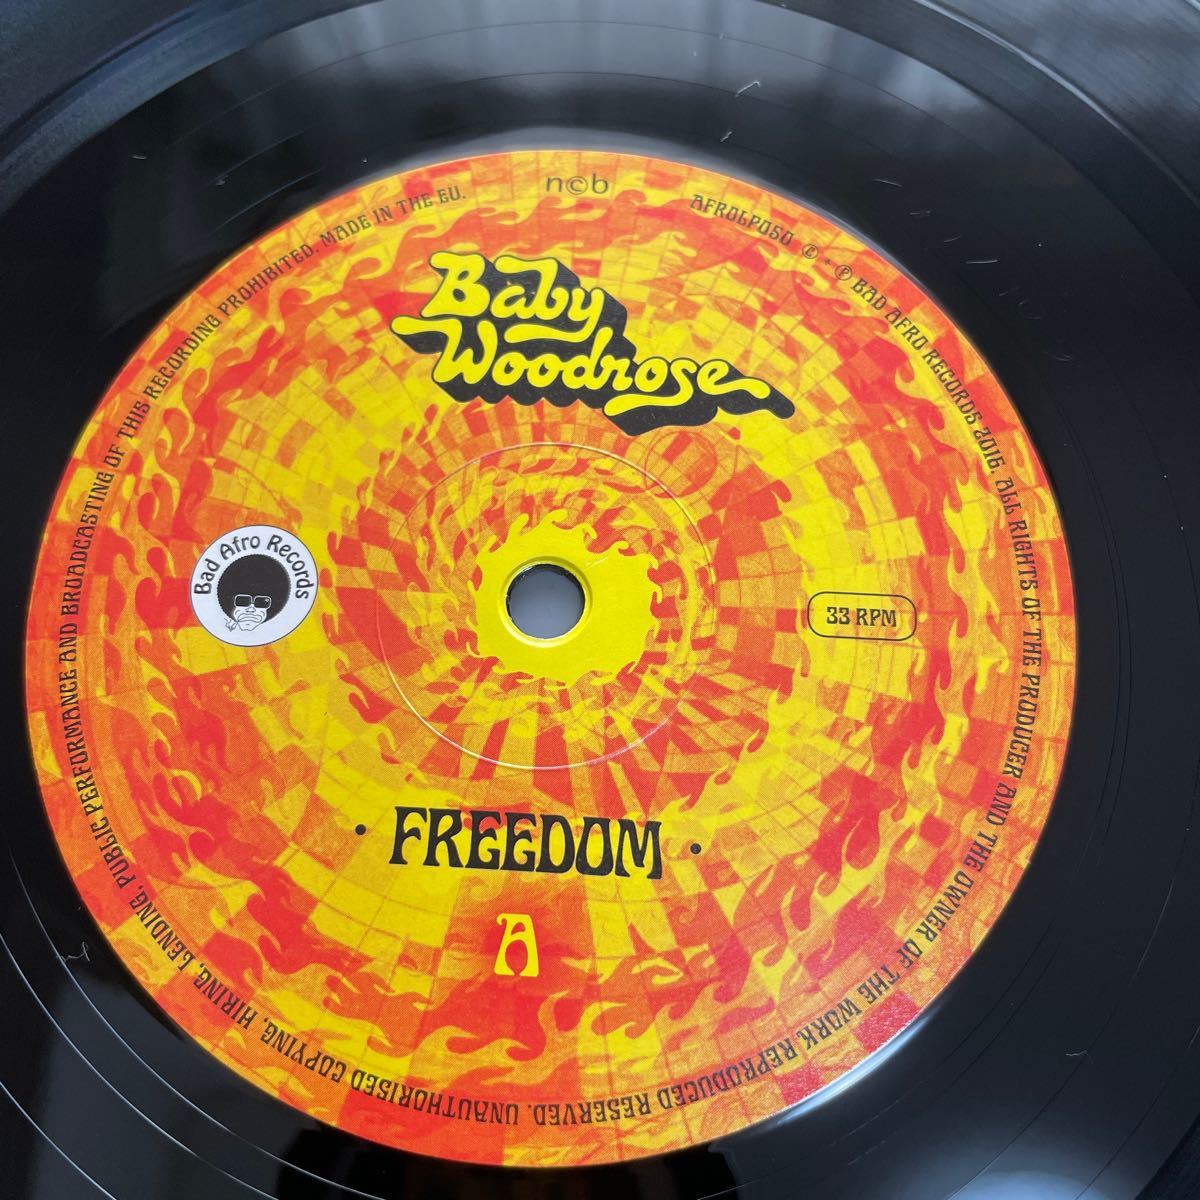 BABY WOODROSE - freedom LP+CD サイケ psych acid stoner rock psychedelic_画像4